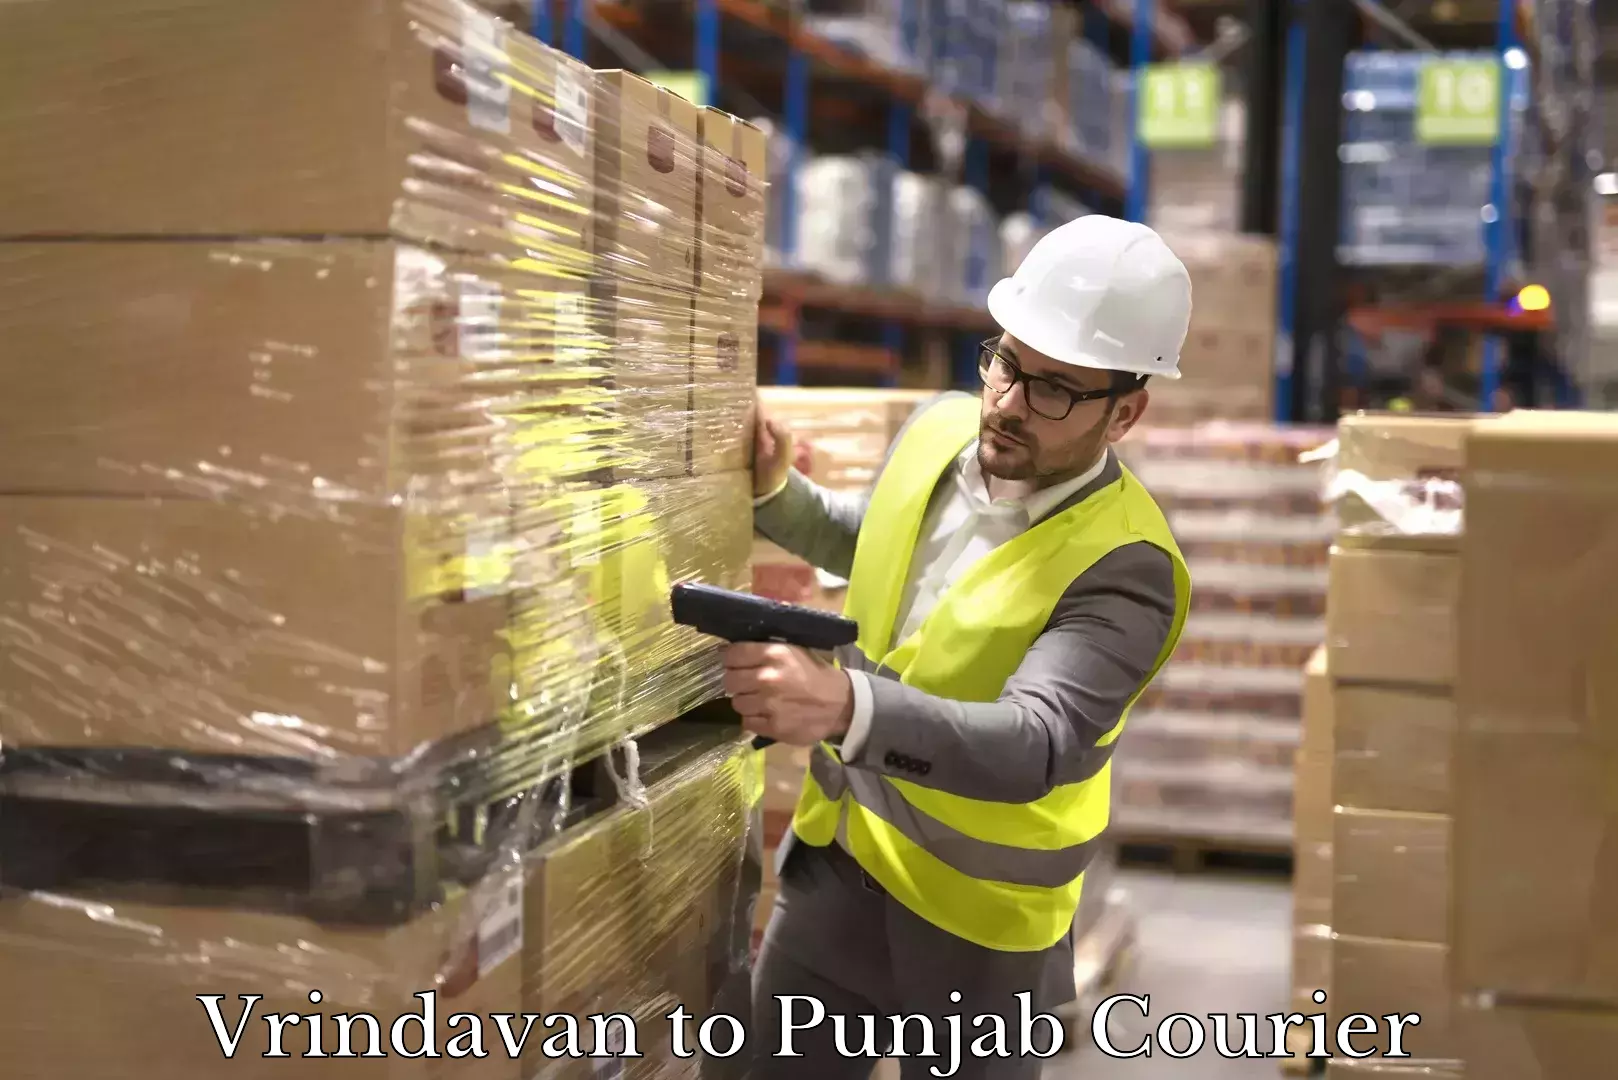 User-friendly delivery service Vrindavan to Punjab